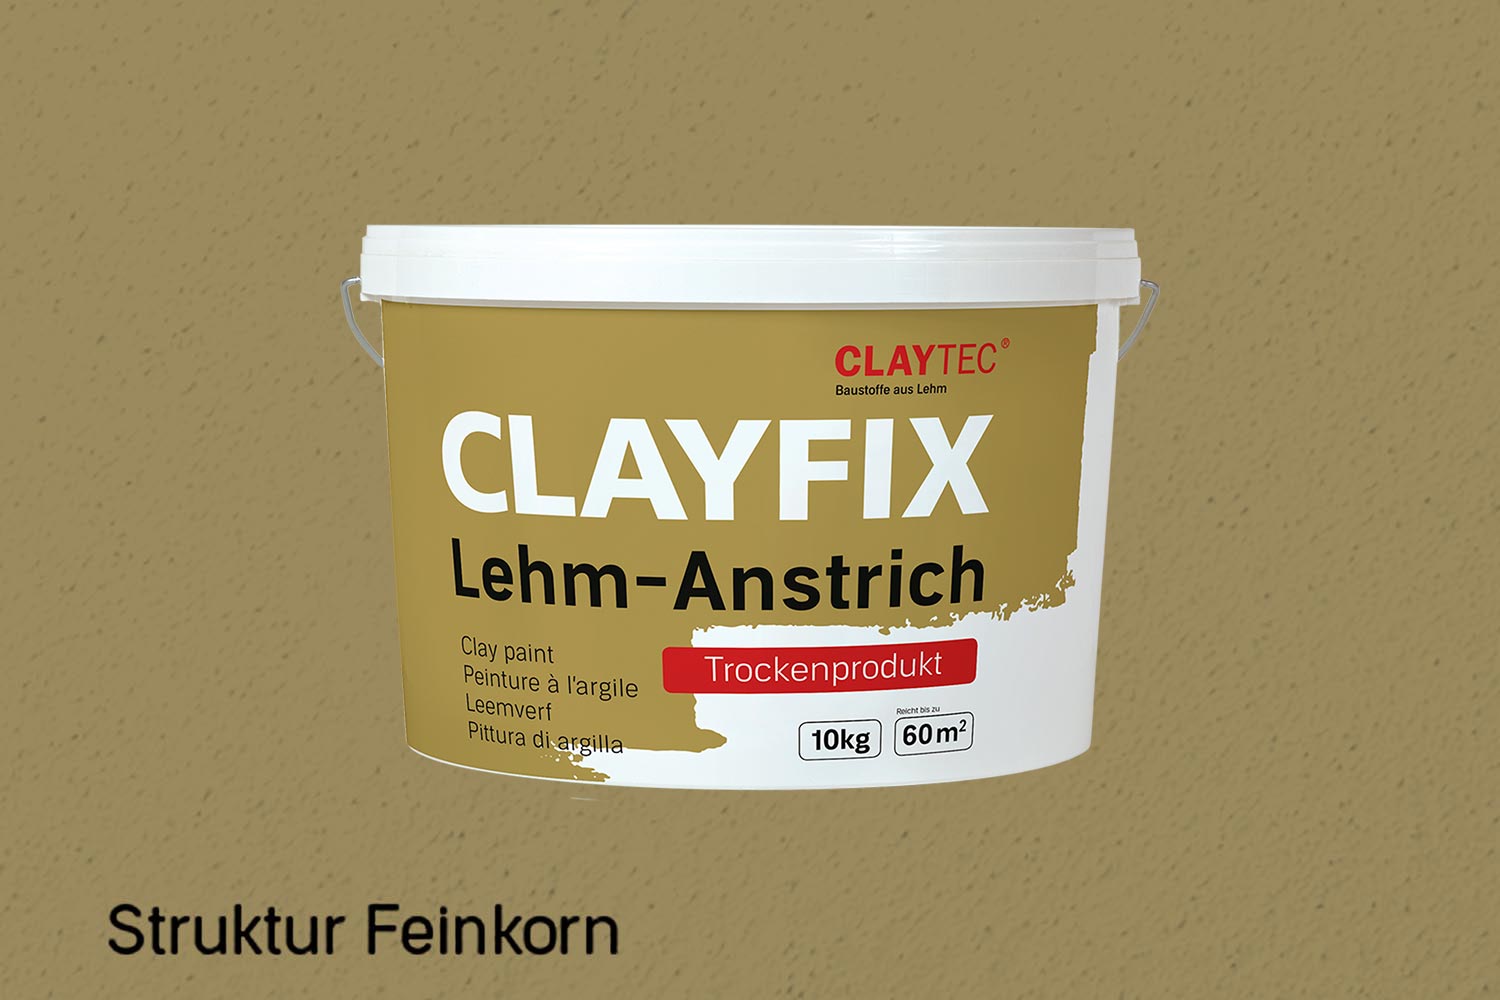 Claytec Clayfix Lehm-Anstrich Feinkorn